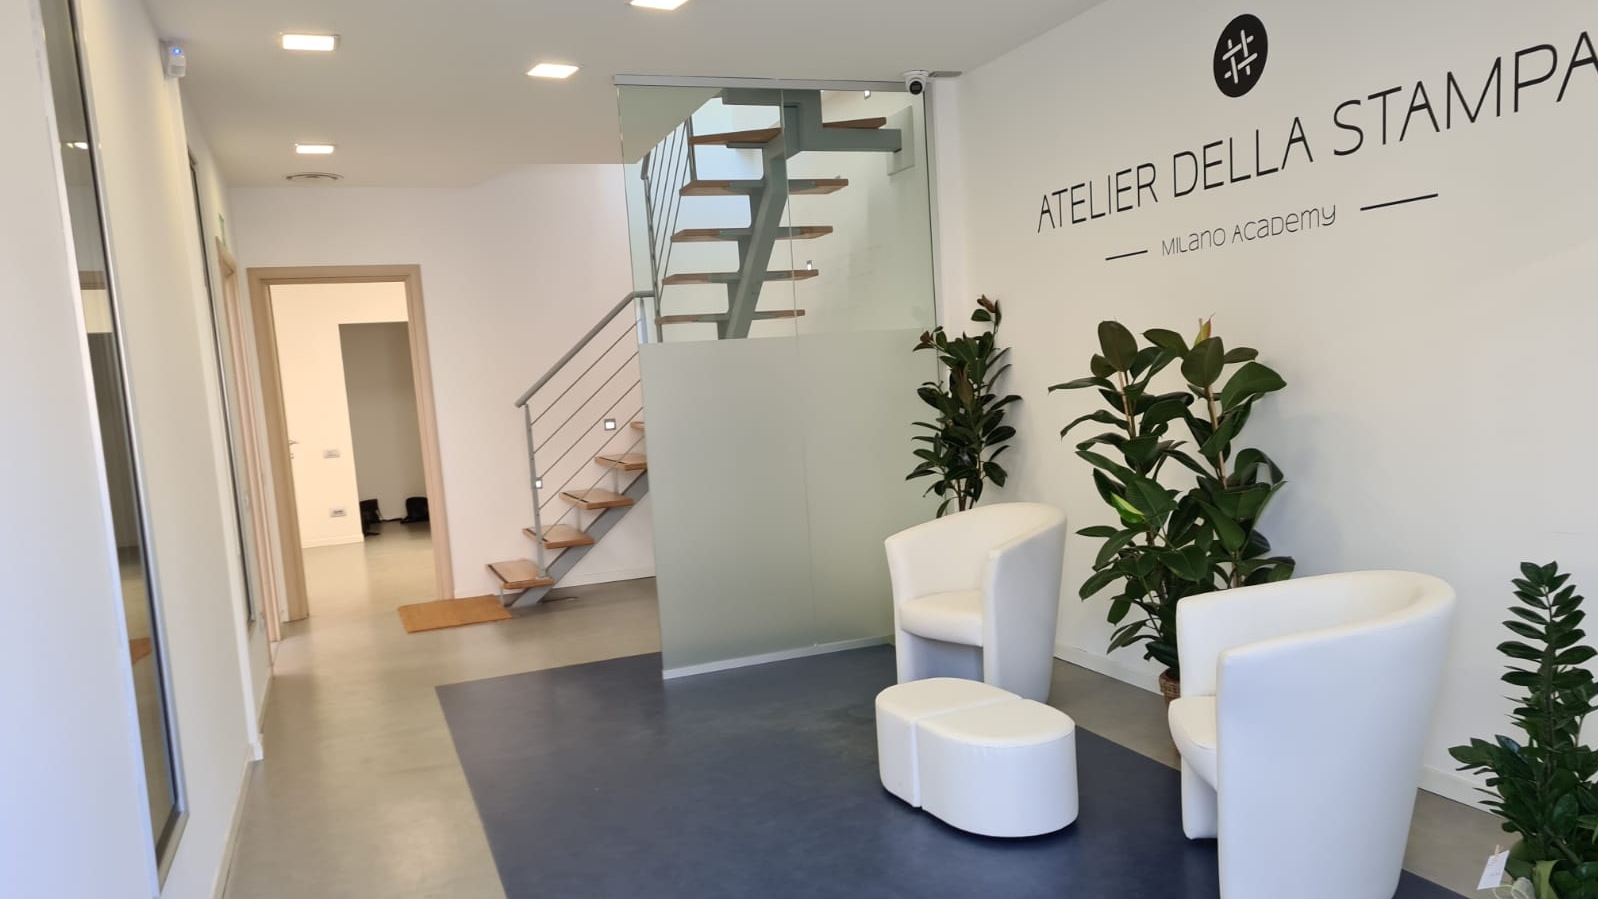 <p>Headquarters and teaching spaces of Atelier della Stampa in Rozzano, Milan, via Varalli 1</p>
